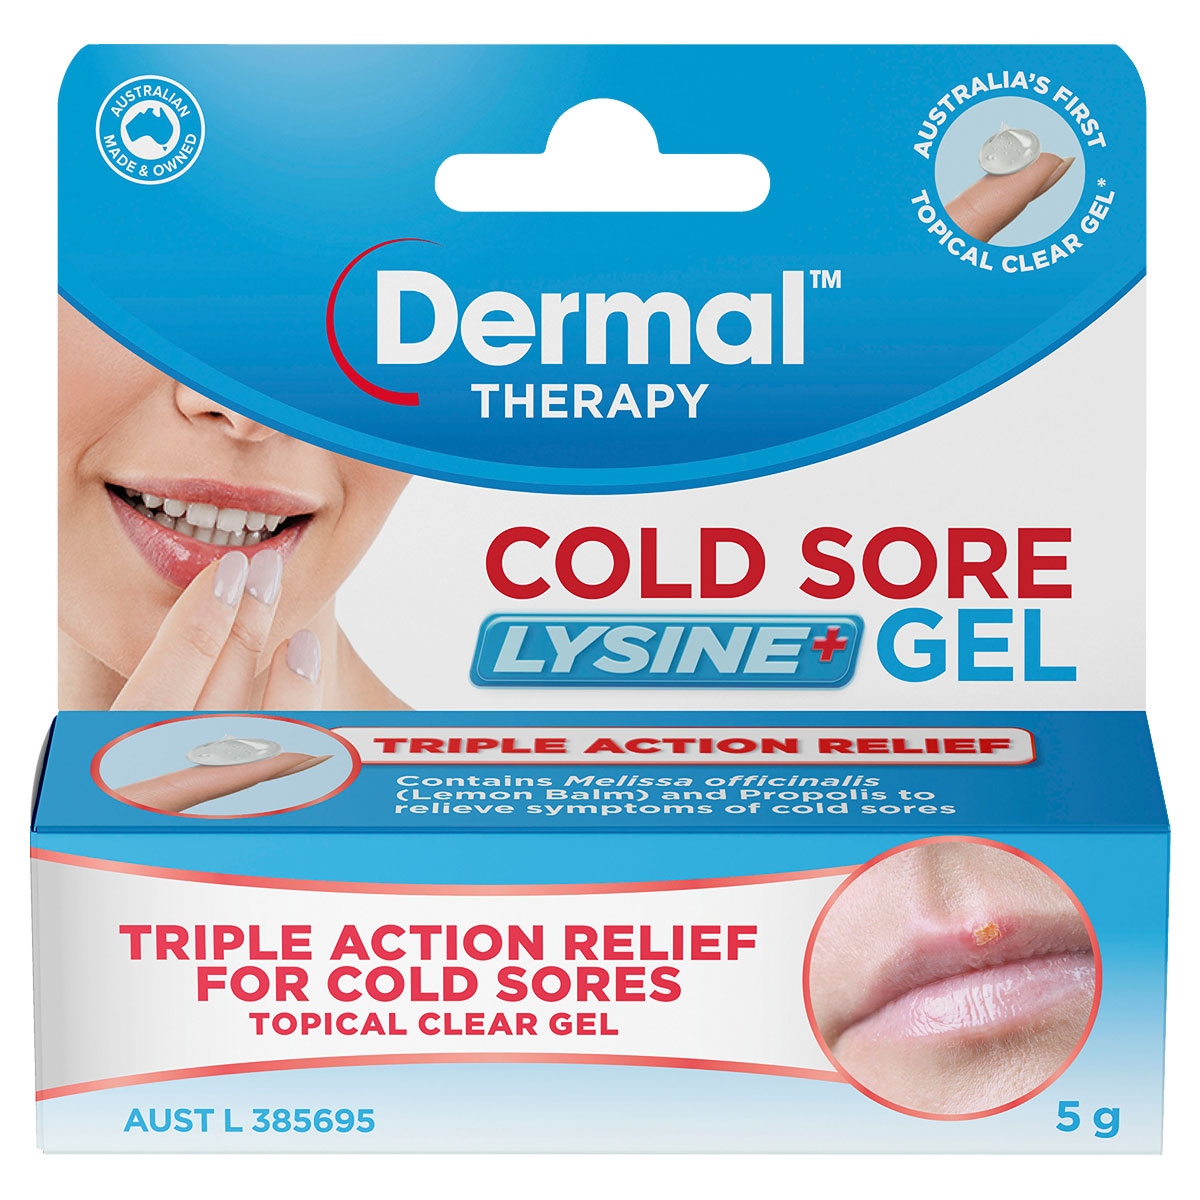 Dermal Therapy Cold Sore + Lysine Gel 5G